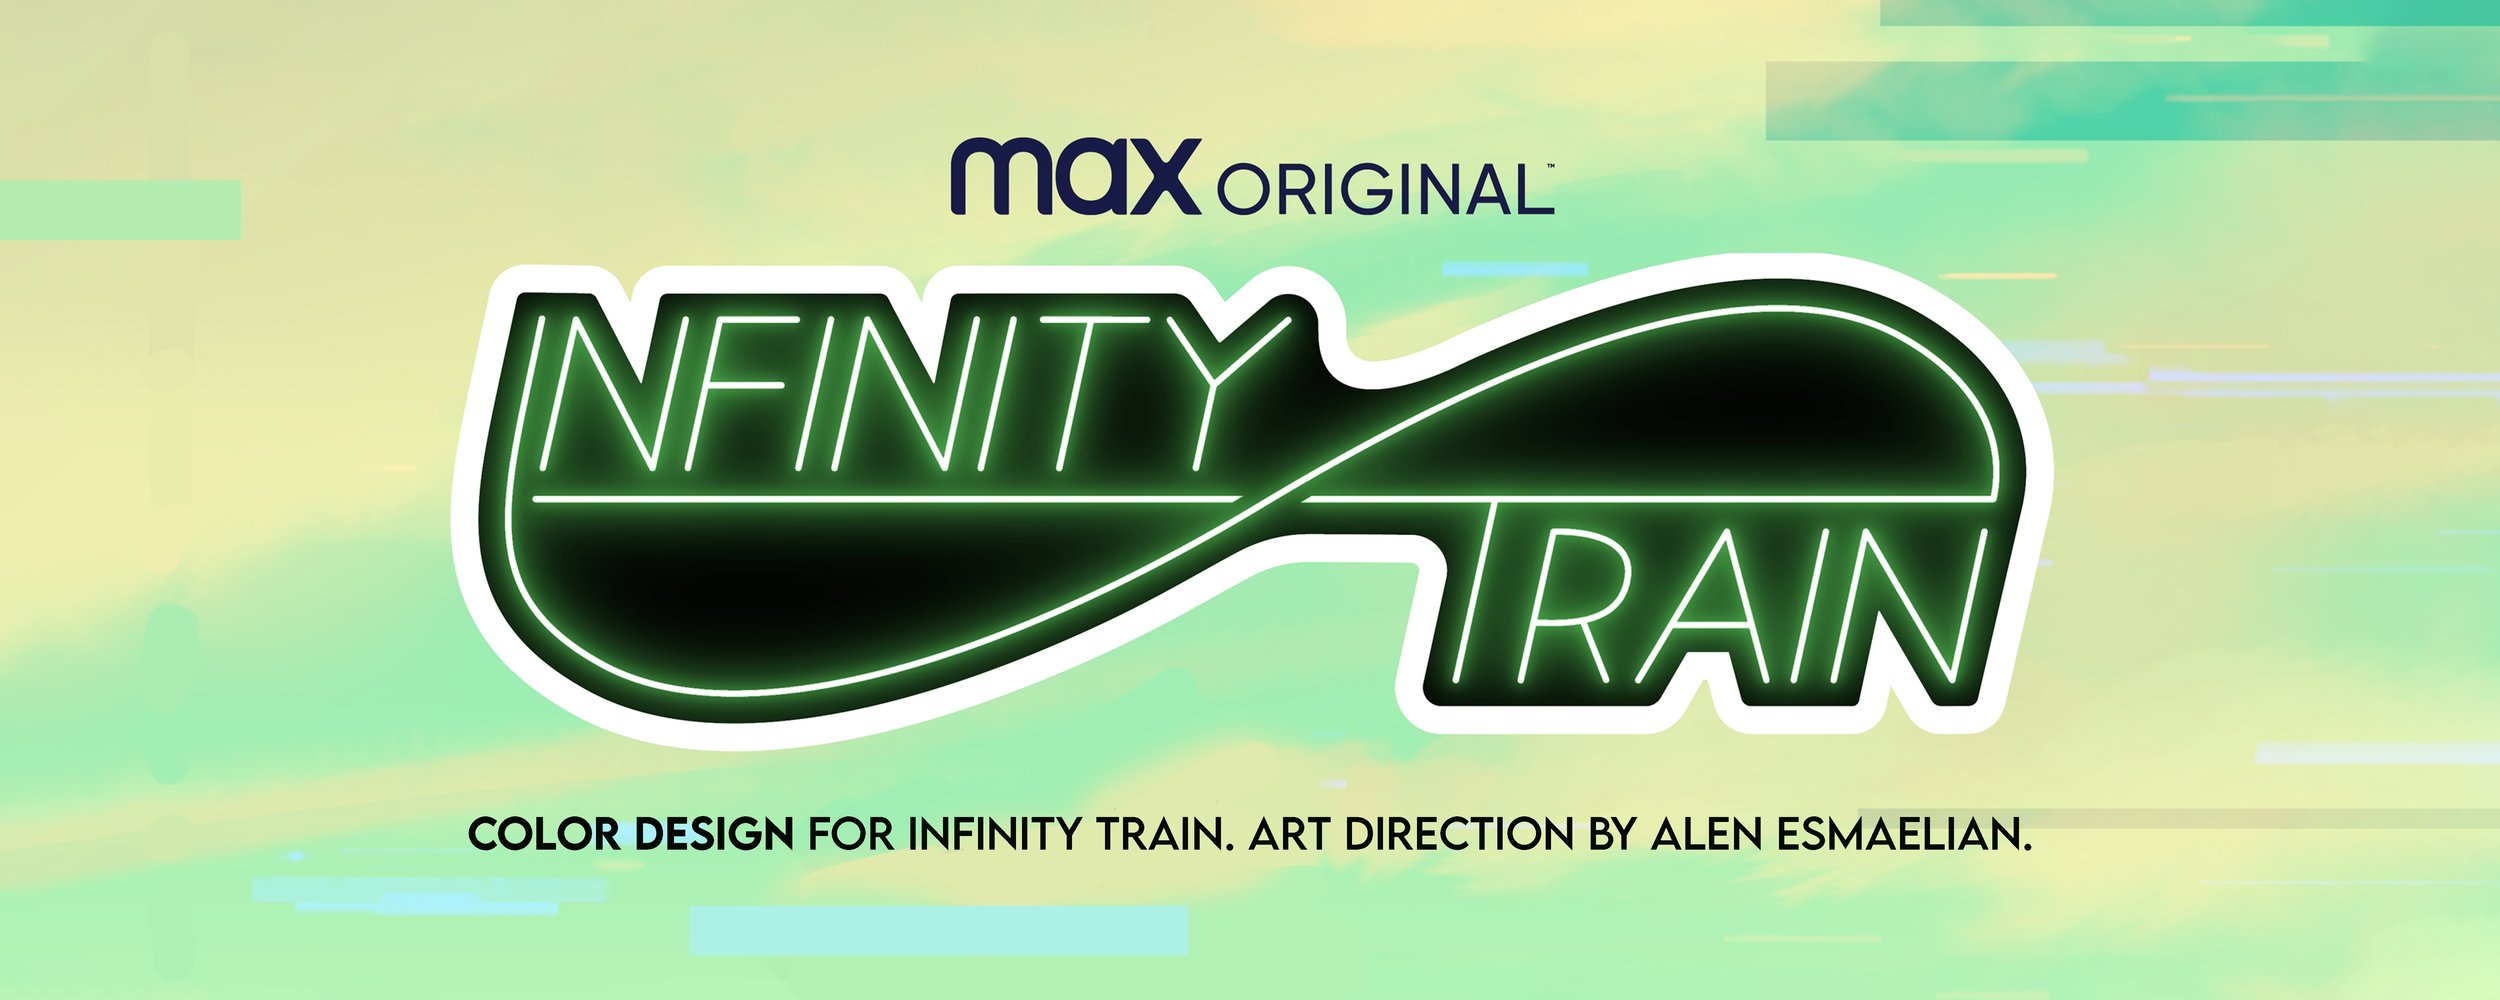 infinity train header color design.jpg